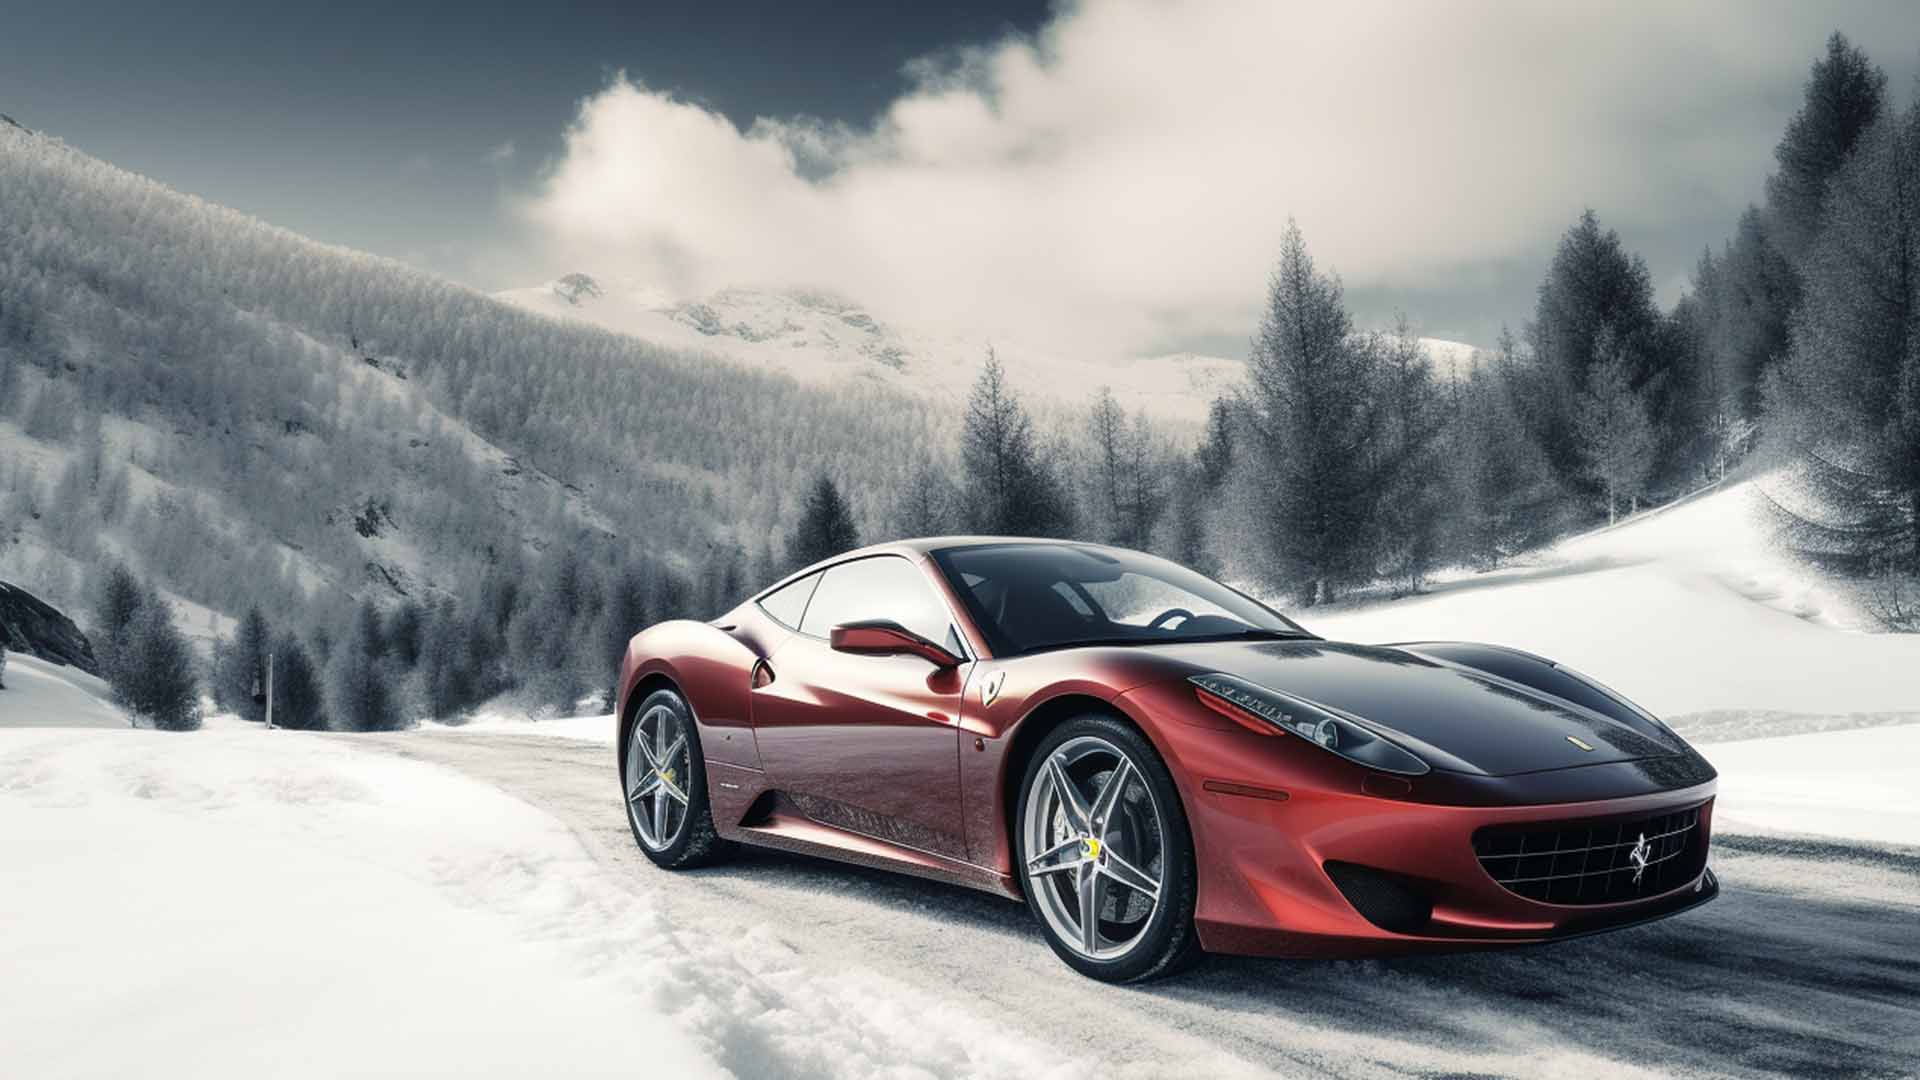 untitled 1 0037 yana heinstein ferrari is parked on a snowy mountain background a522c0f9 4e50 41ee 98c3 03d15ef4b185